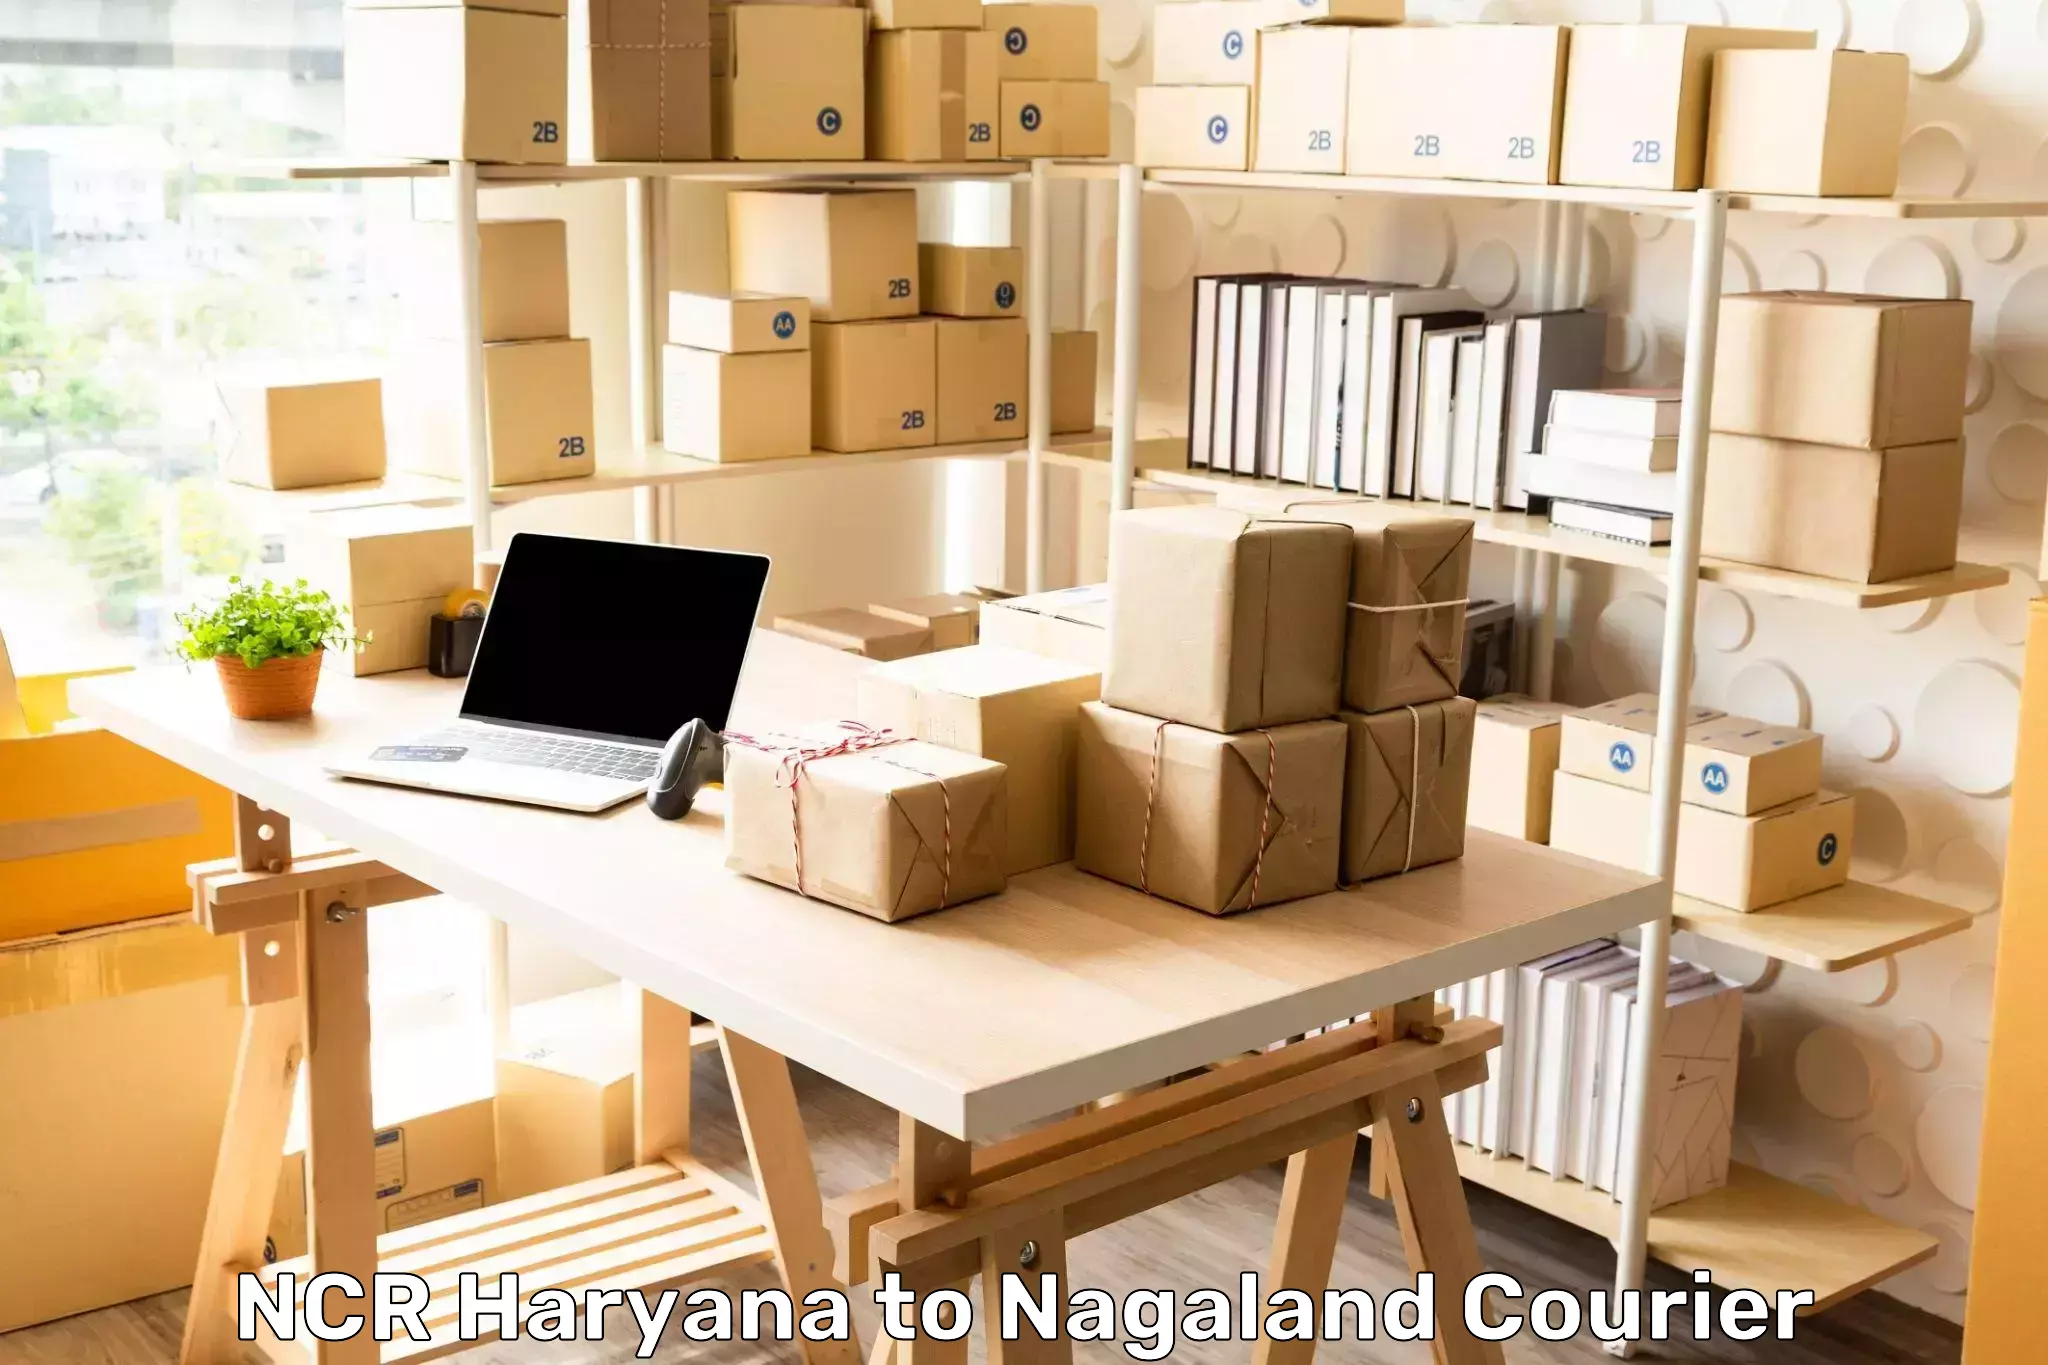 Customer-centric shipping NCR Haryana to Nagaland